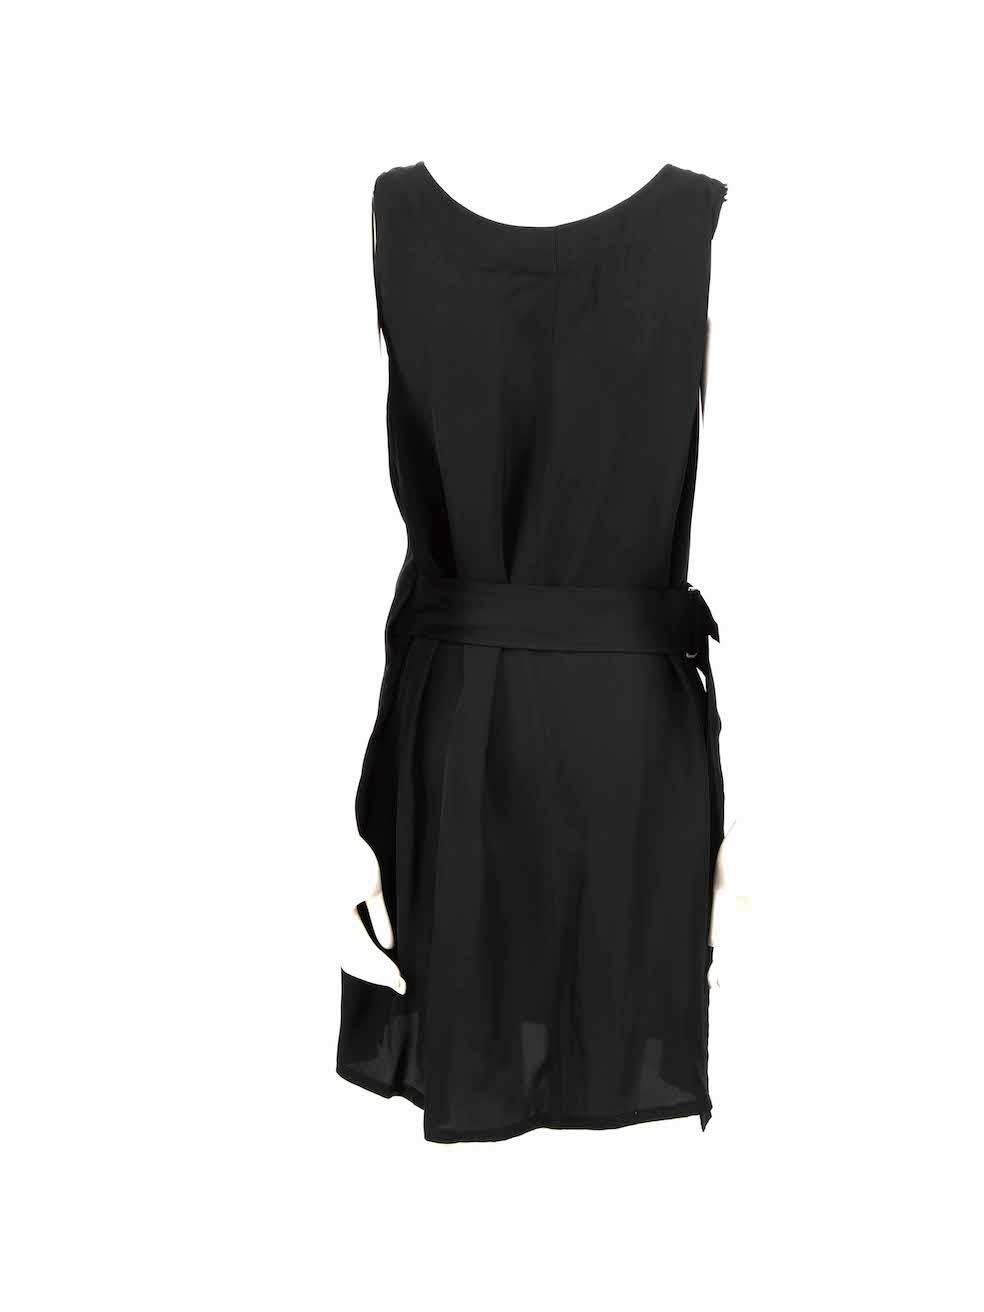 Yohji Yamamoto Y‚Äôs by Yohji Yamamoto Black Asymmetric Neck Belted Dress Size M In Good Condition For Sale In London, GB